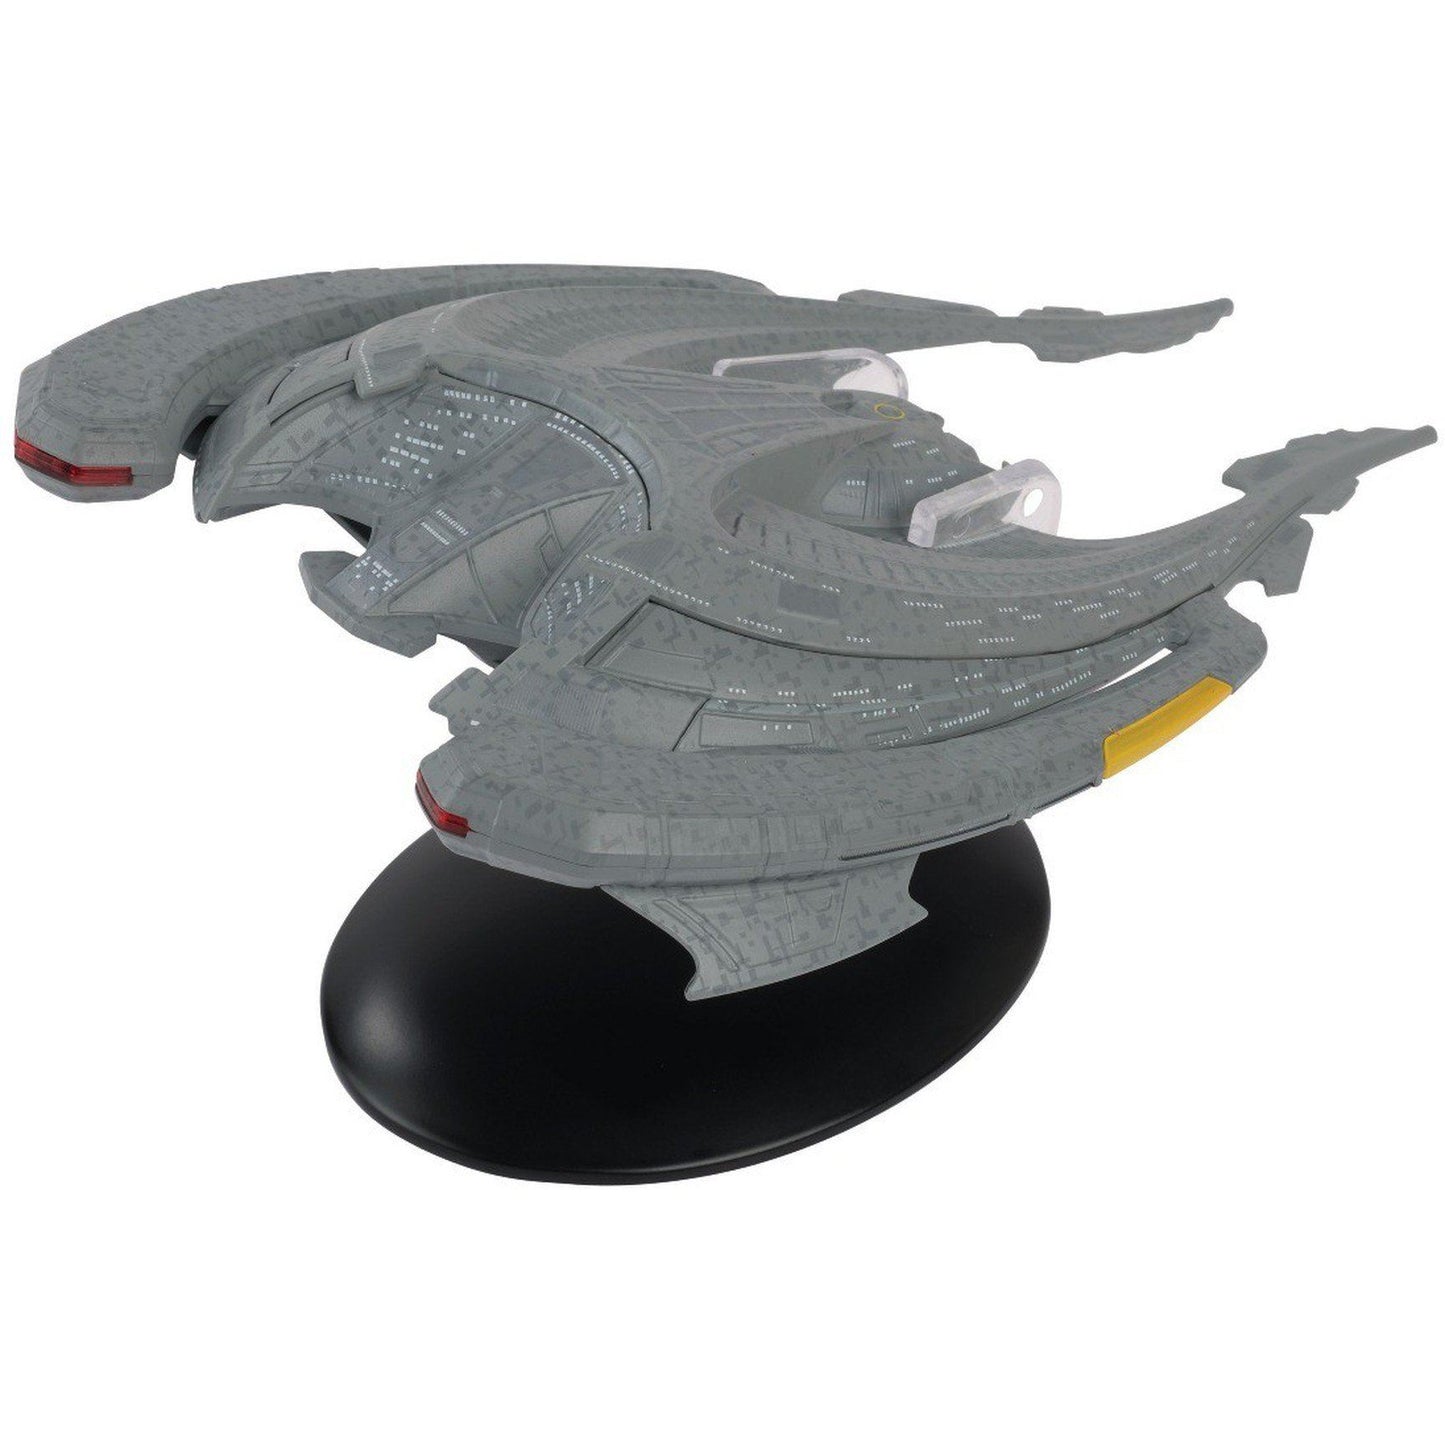 #19 S'Onar Flagship Model Navire moulé sous pression Star Trek